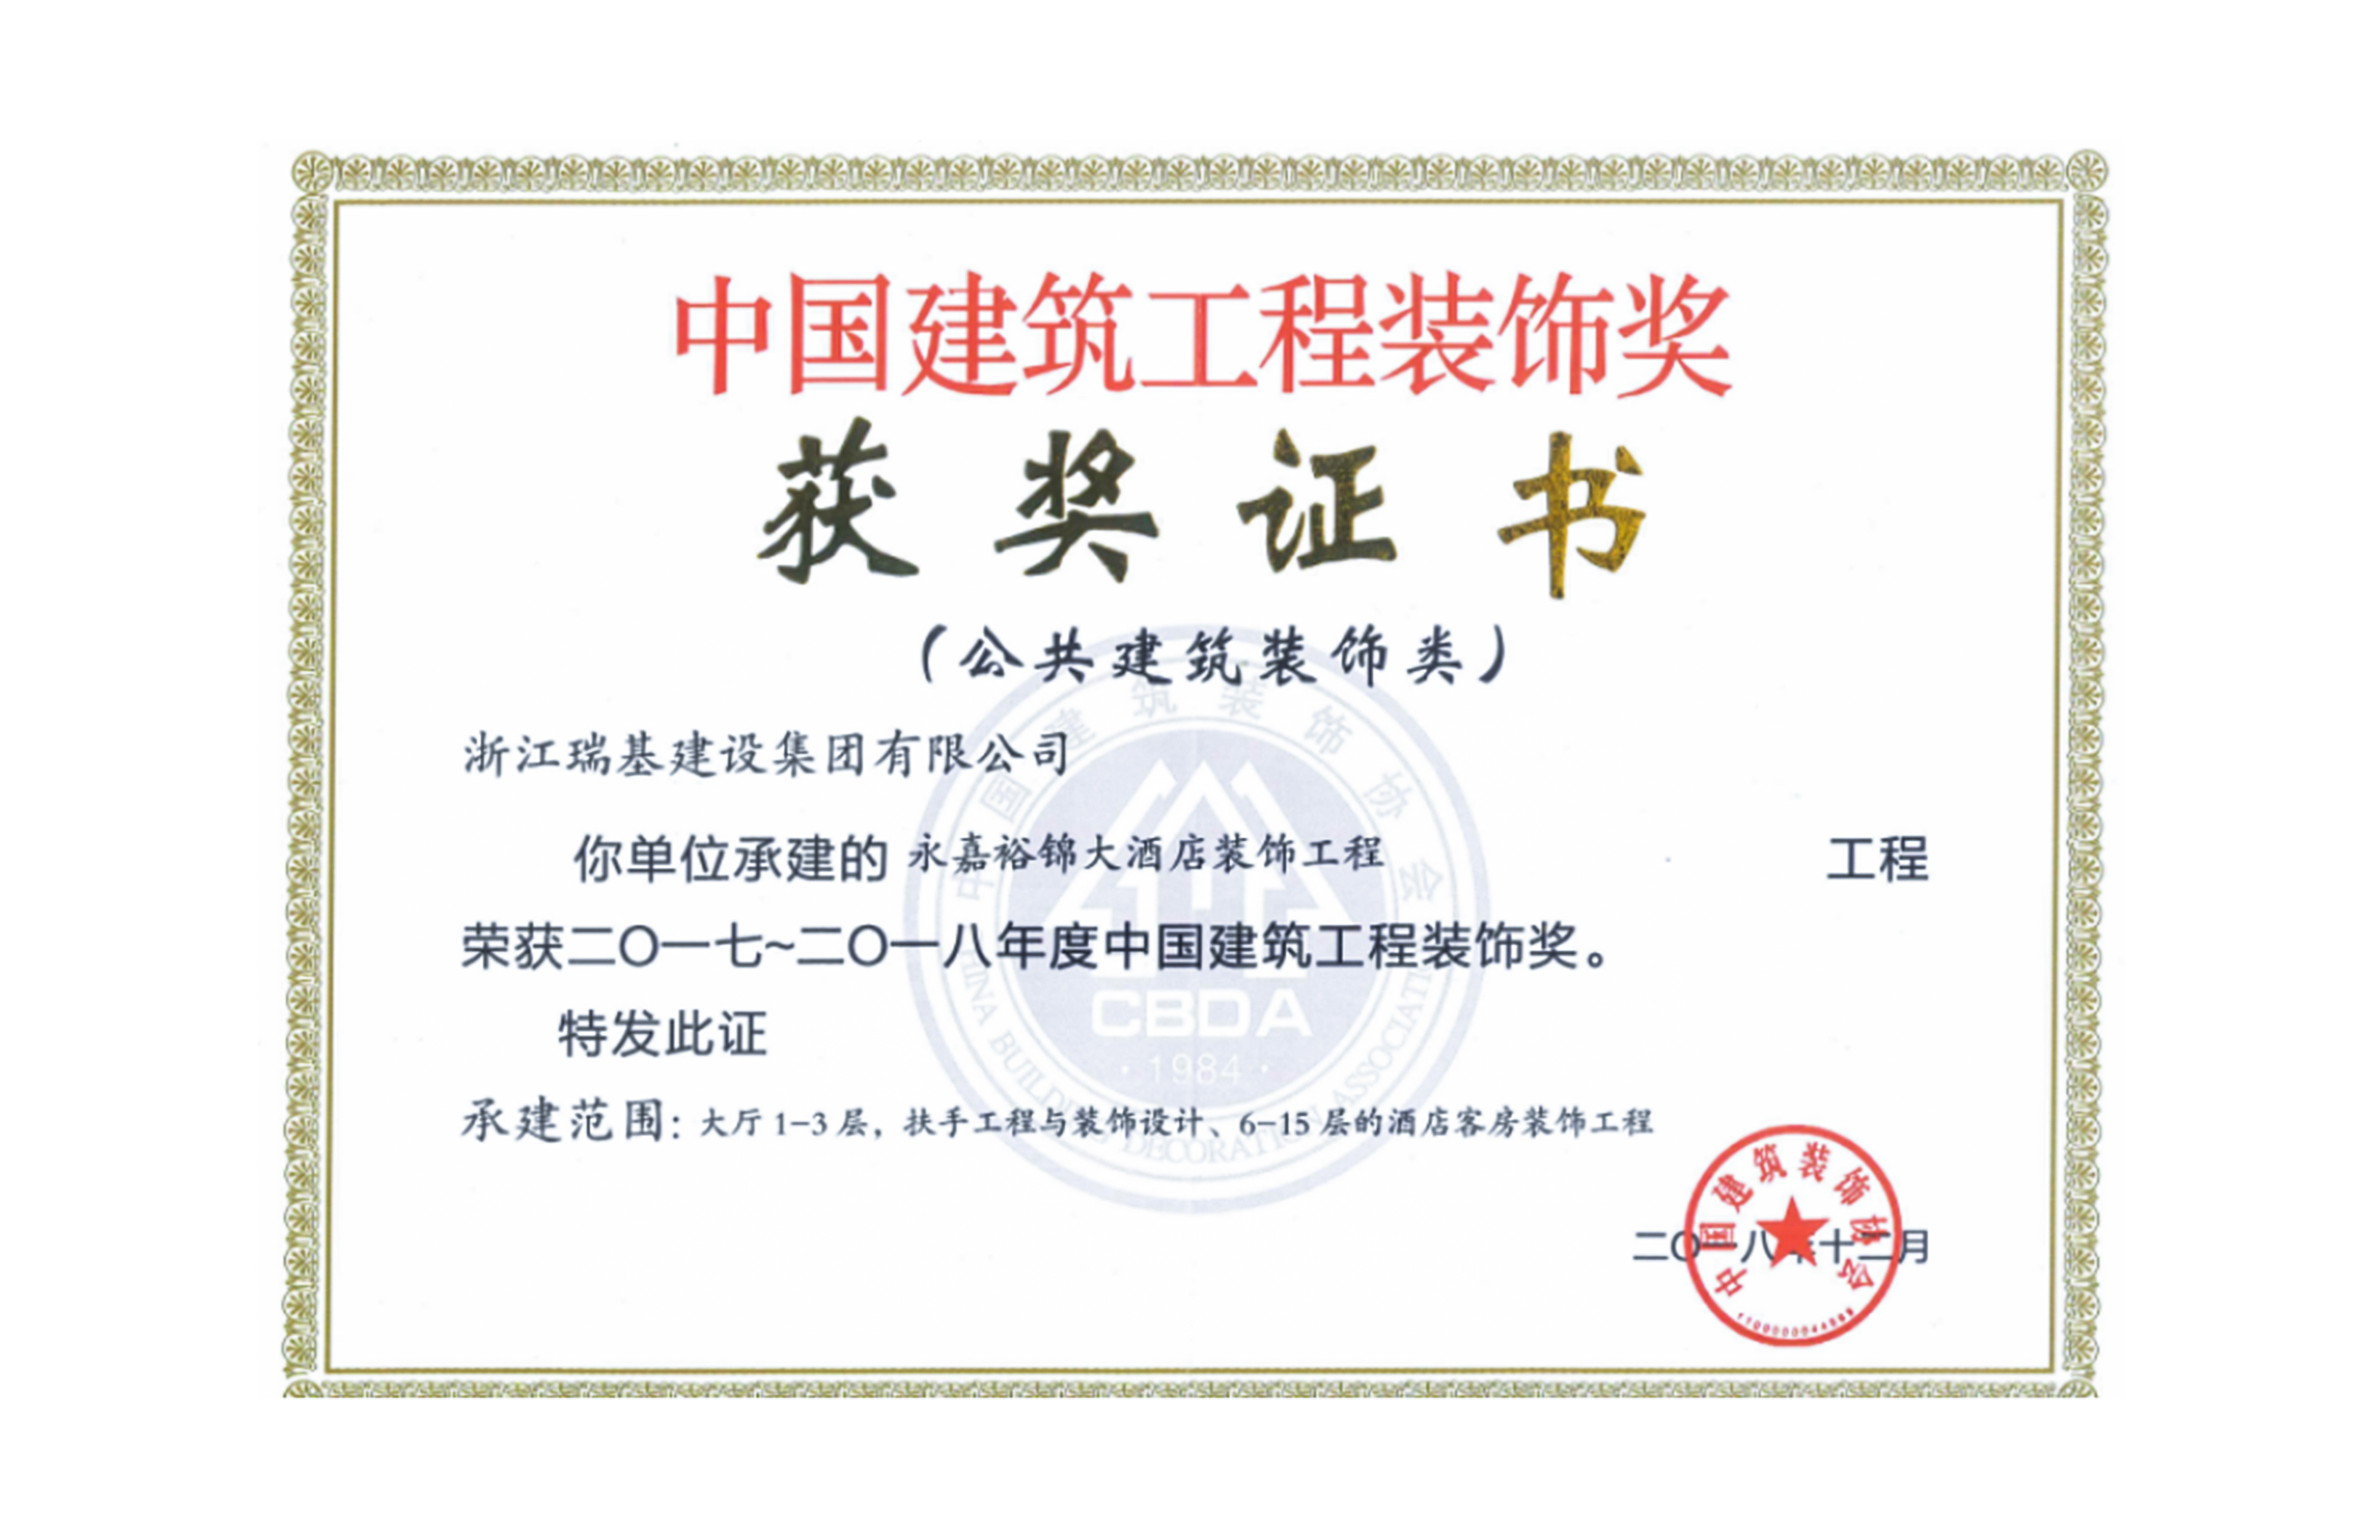 China Construction Engineering Decoration Award (public building decoration category)